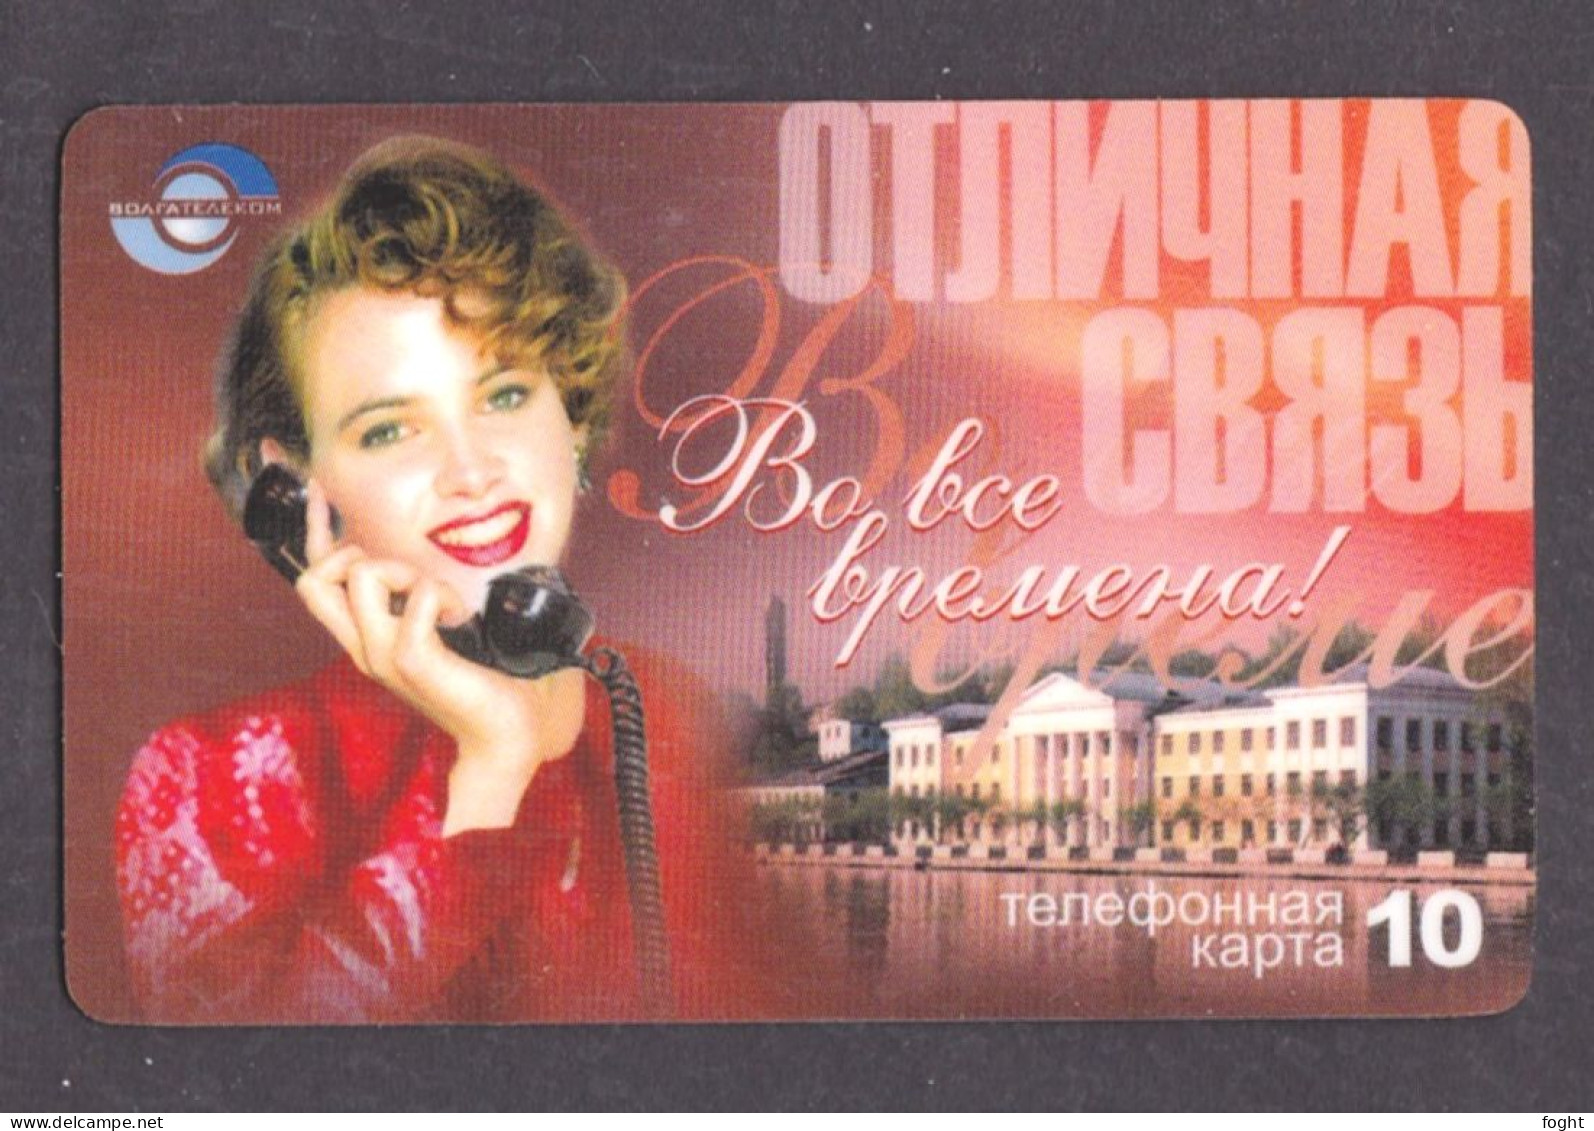 2003 ЕЮ Remote Memory Russia ,Volga Telecom-Izhevsk,Good Connection All The Time!,10 Units Card,Col:RU-PRE-UDM-0272 - Russland